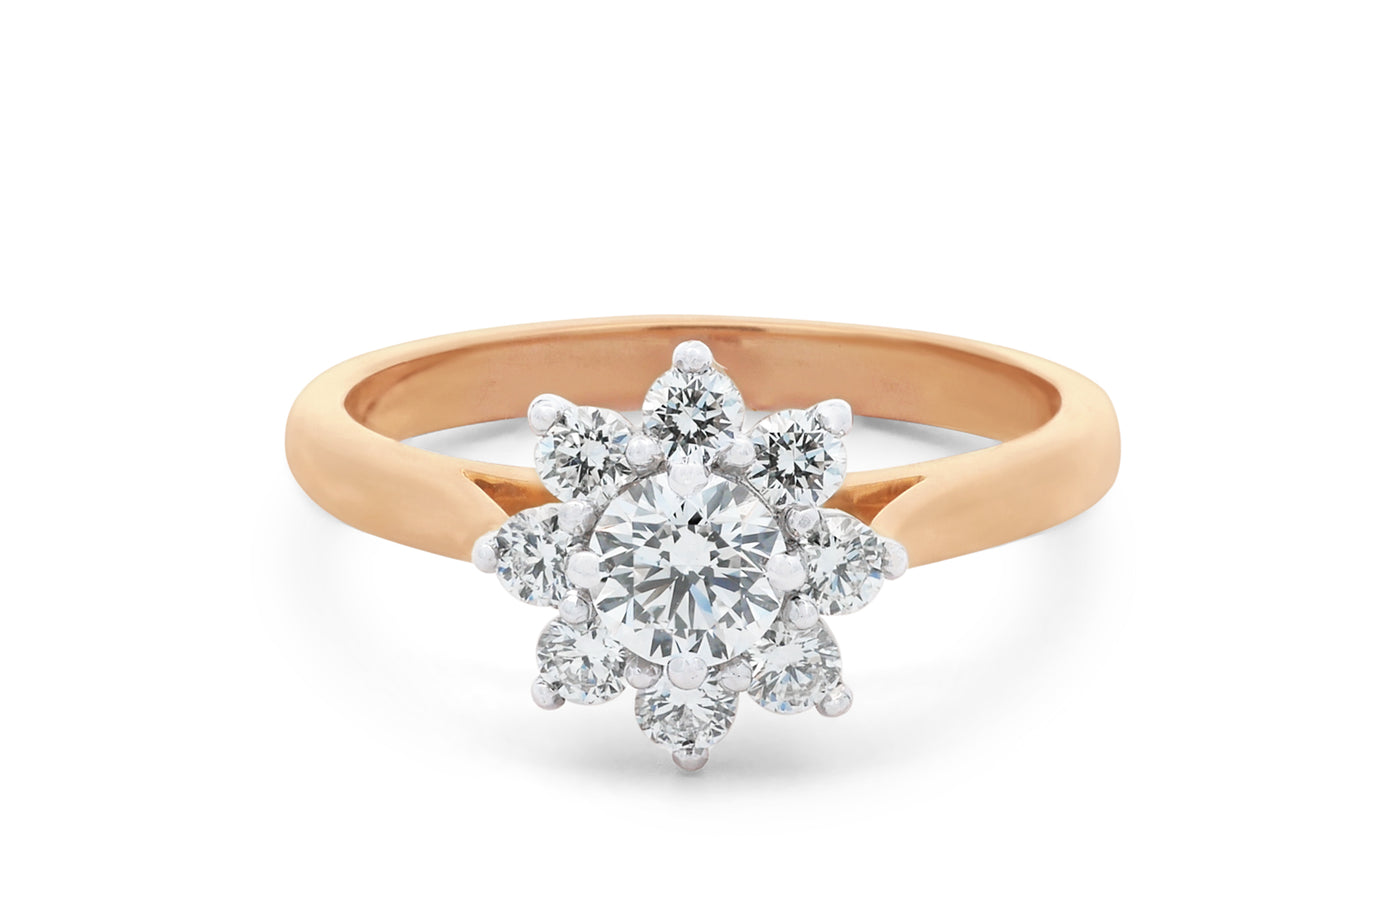 Fleur: Brilliant Cut Diamond Halo Ring